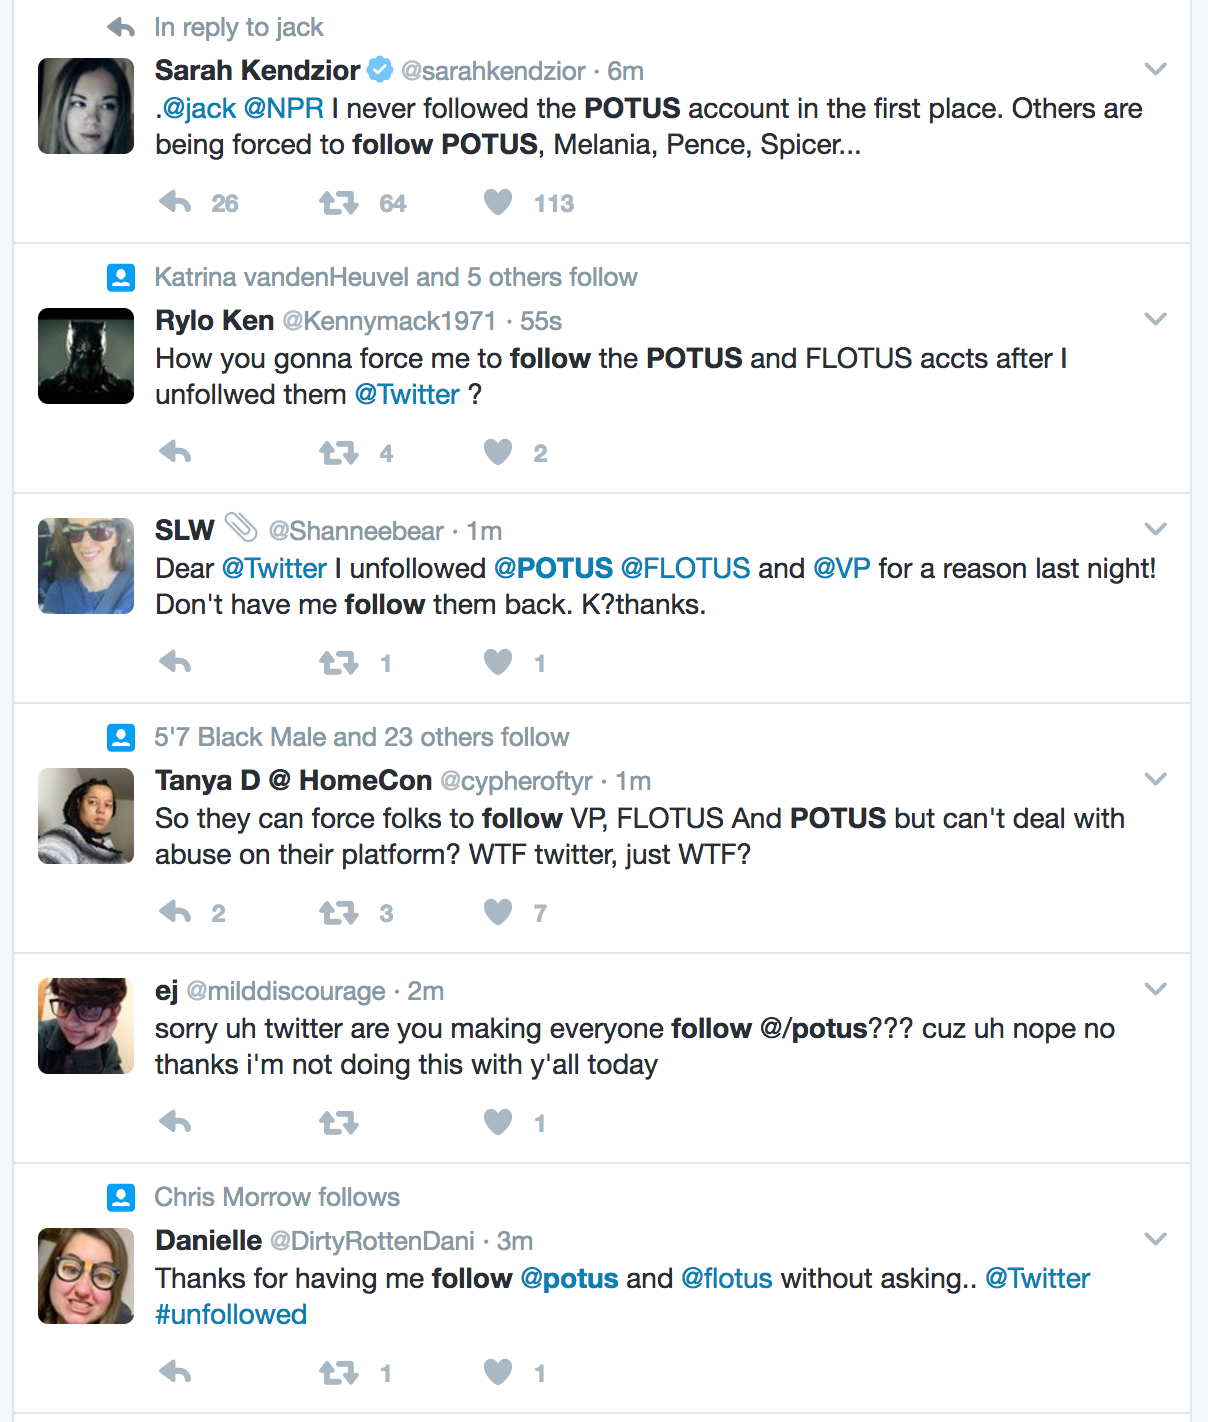 Twitter forces people to follow @POTUS, @FLOTUS & @VP accounts